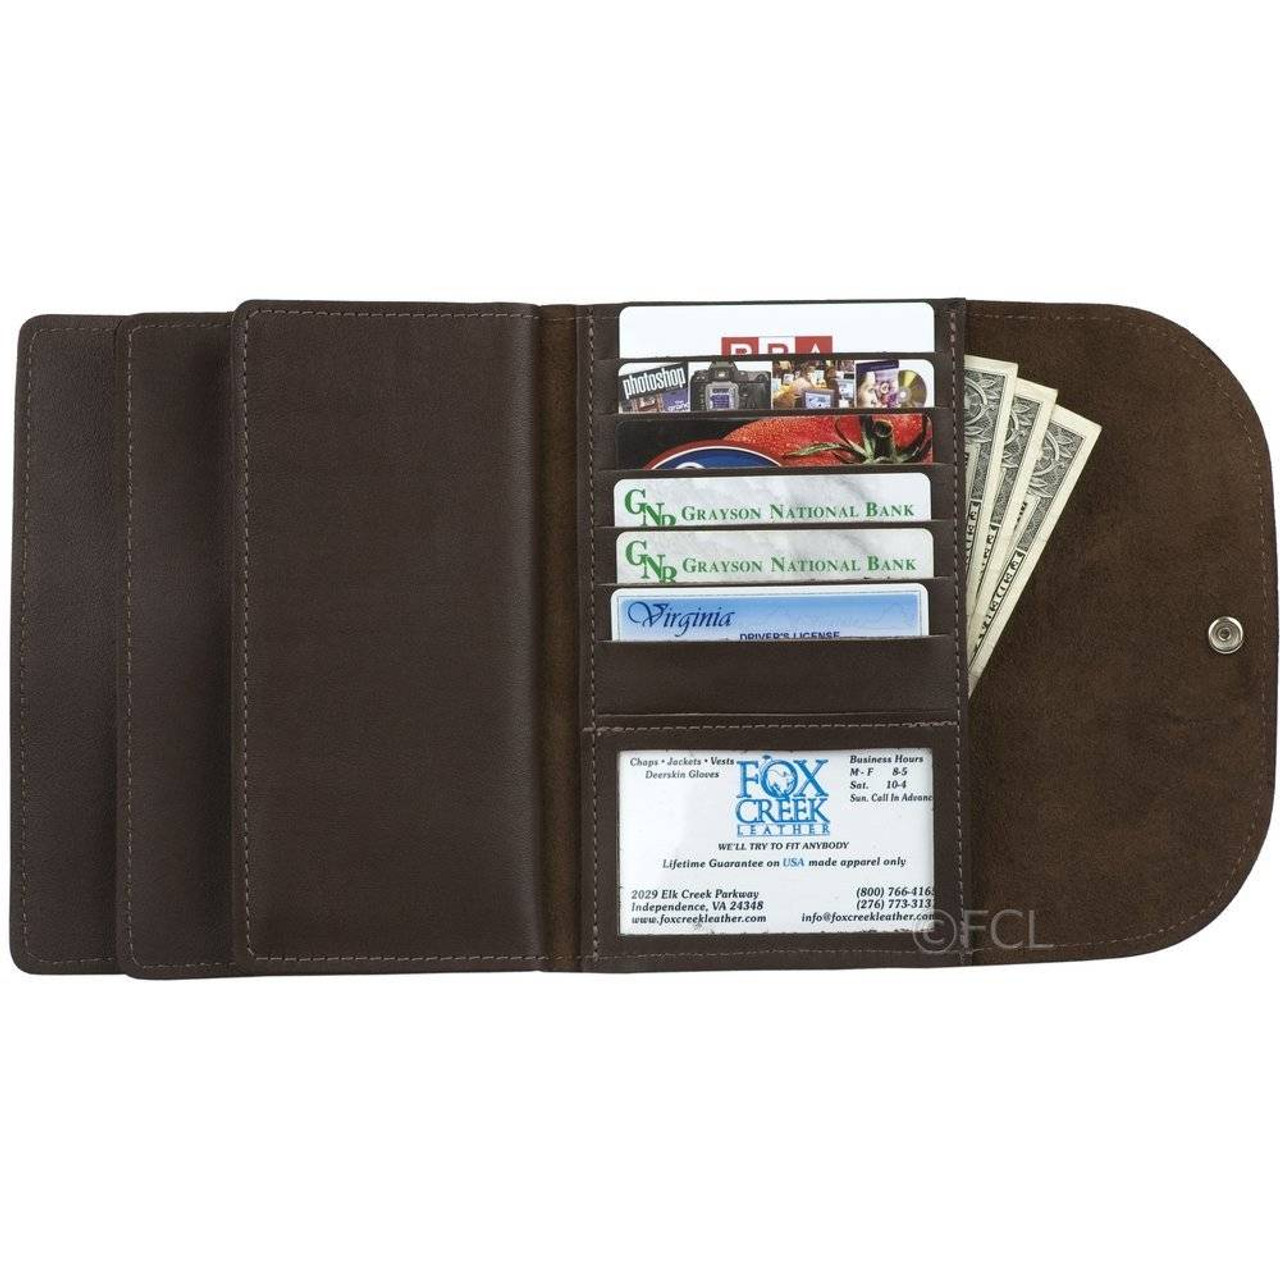 Glamfox - Checker Credit Card Wallet - 3 Colors Available / Cream